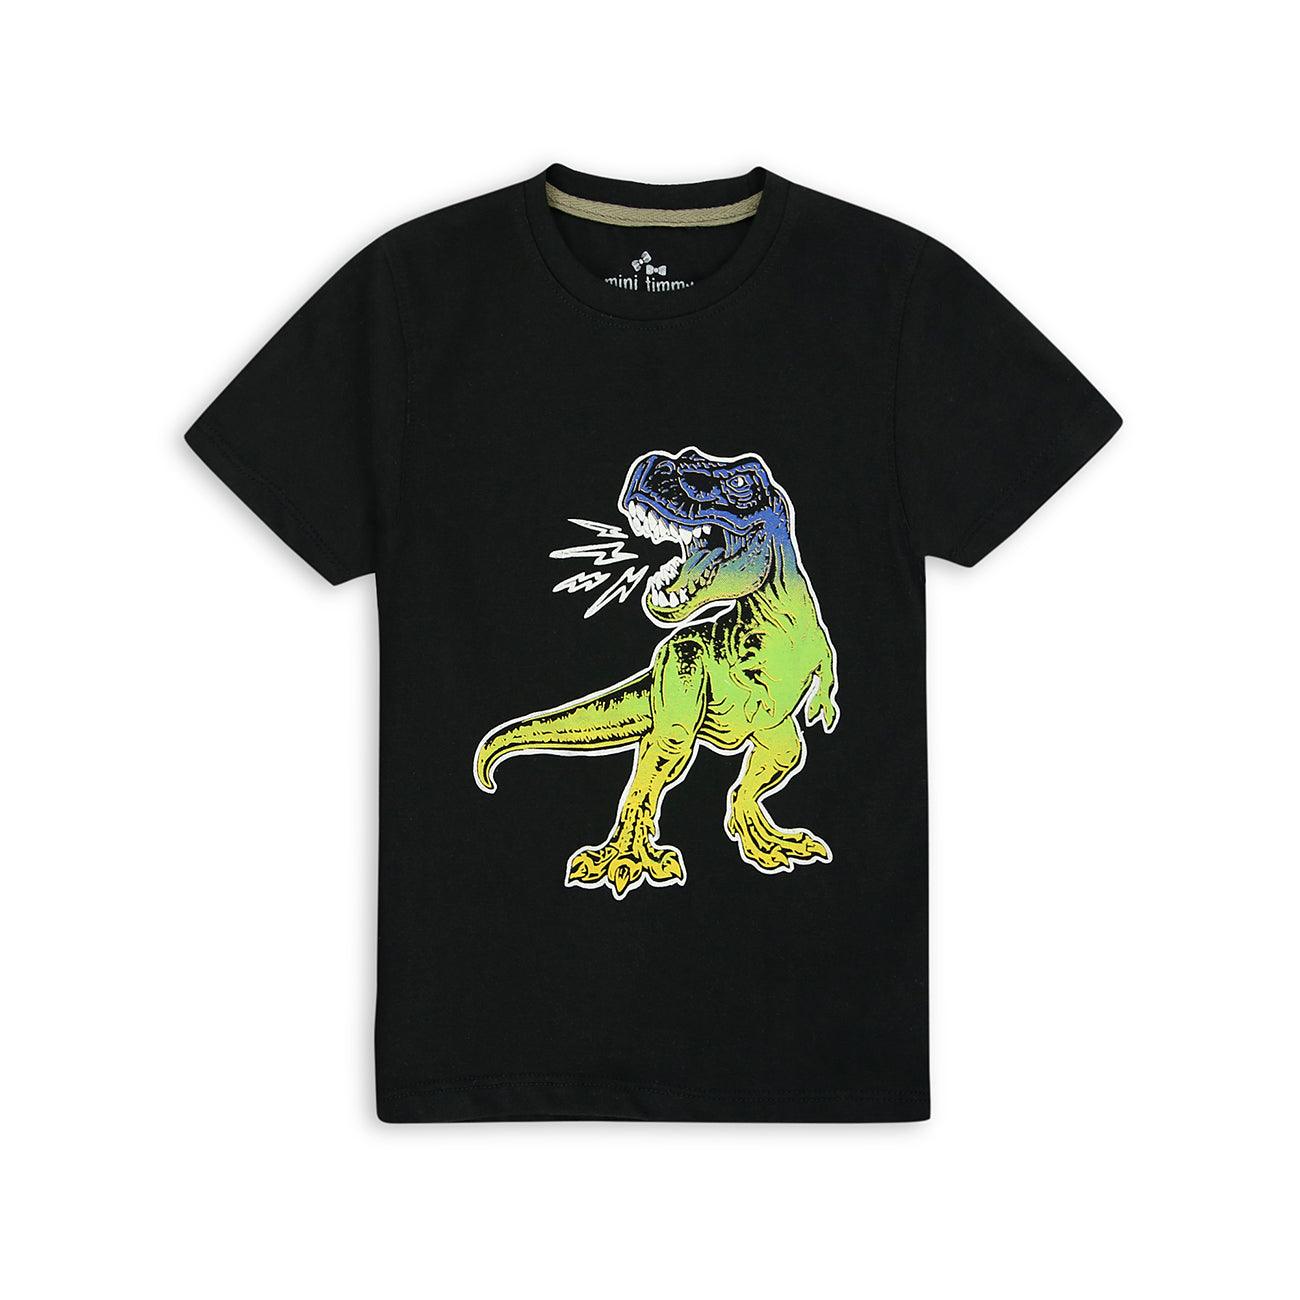 Boys "Dino" Printed Soft Cotton Black T-Shirt 9 MONTH - 10 YRS (MI-10965) - Brands River